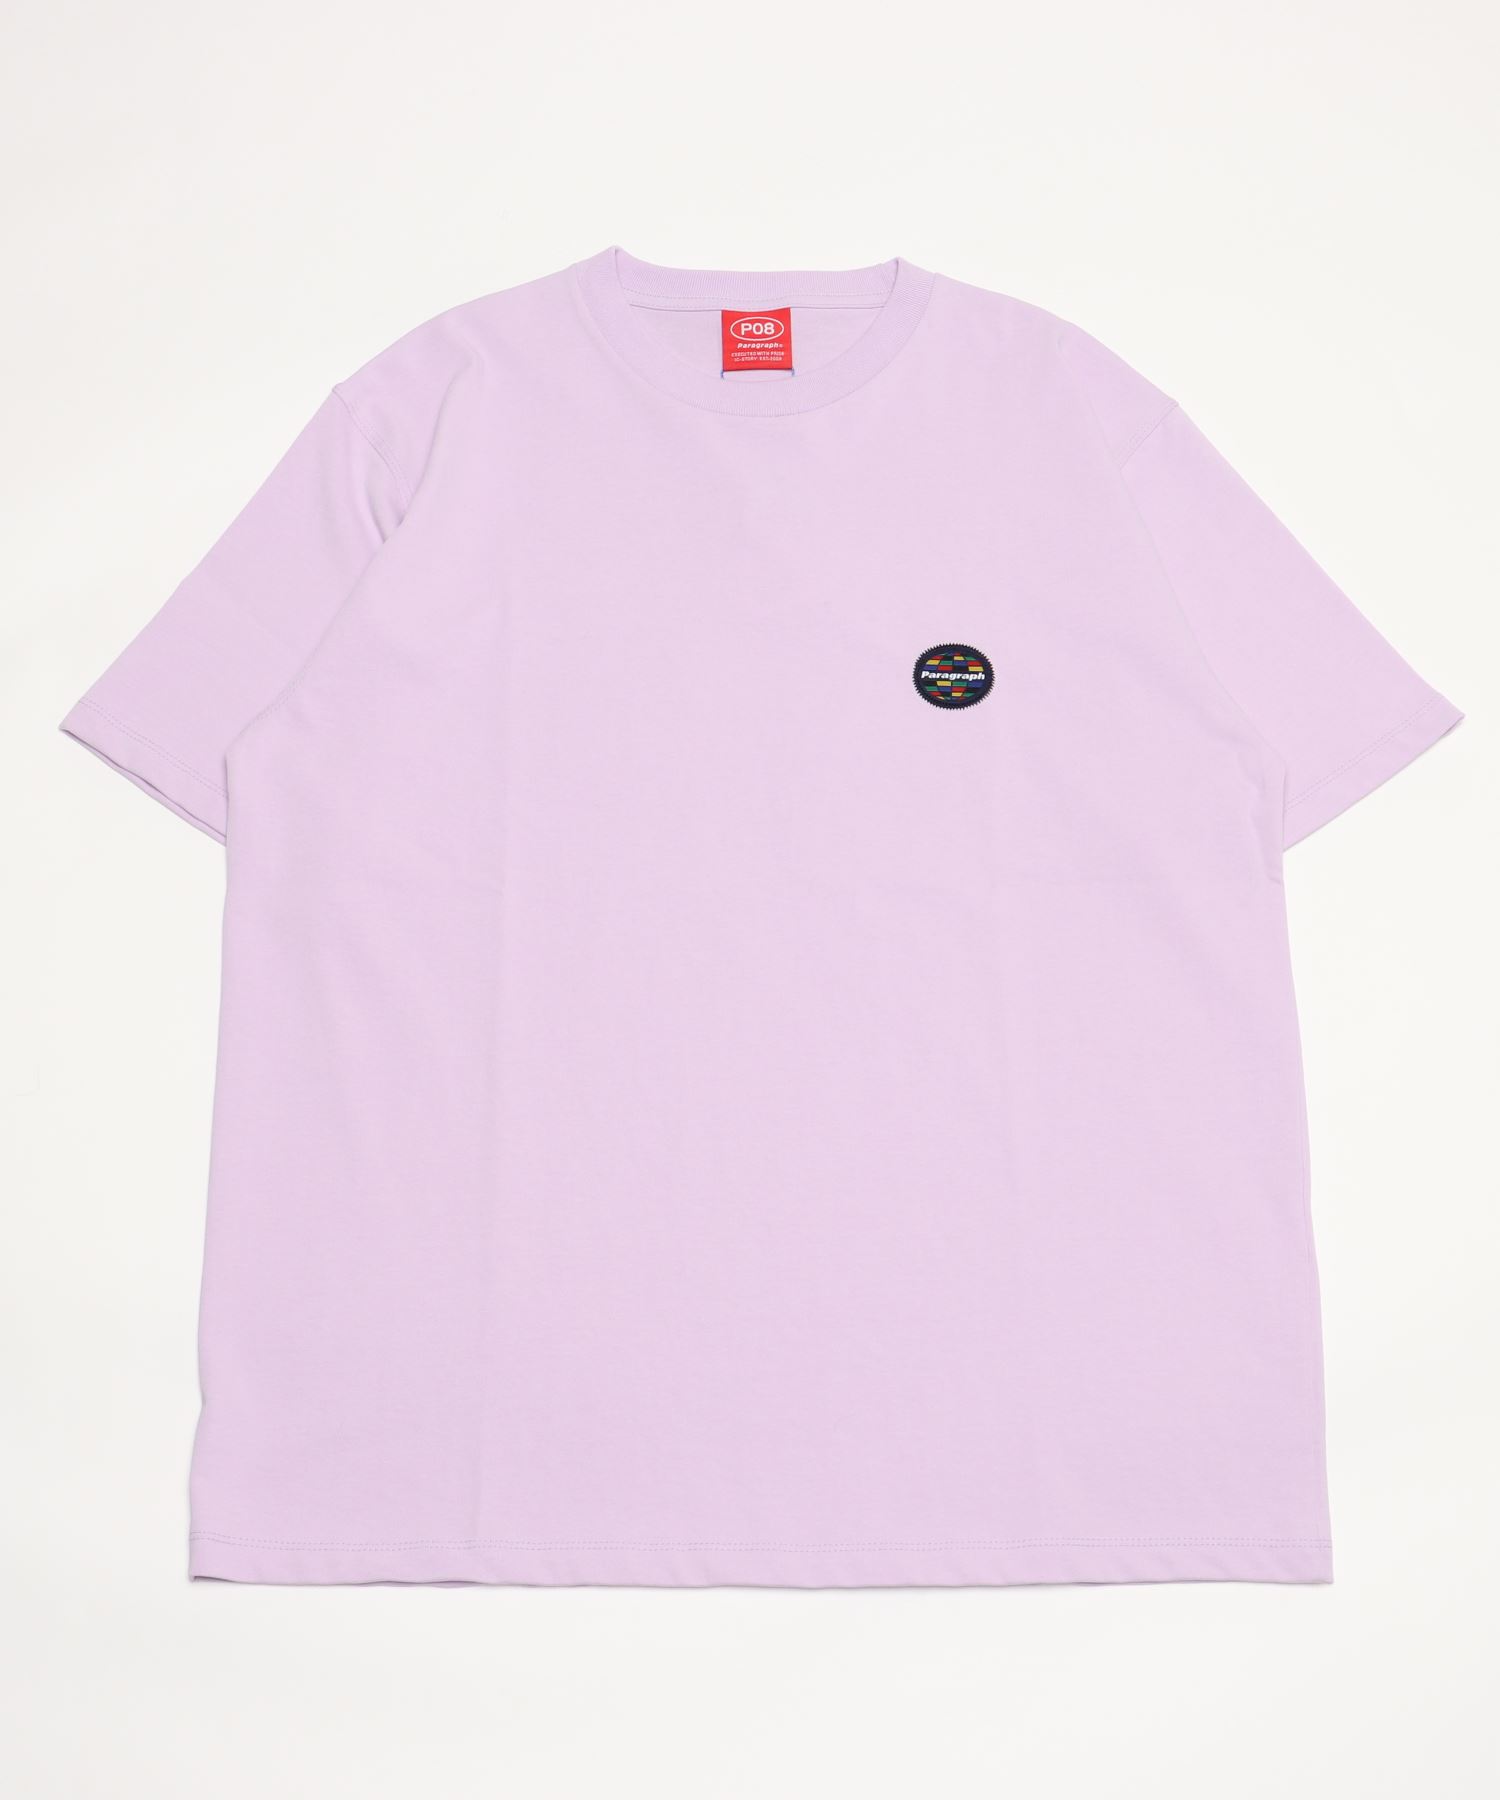 A'GEM/9 × .kom『paragraph/パラグラフ』Random color Earth T-shirt/ランダムカラーアースデザイン 半袖Tシャツ